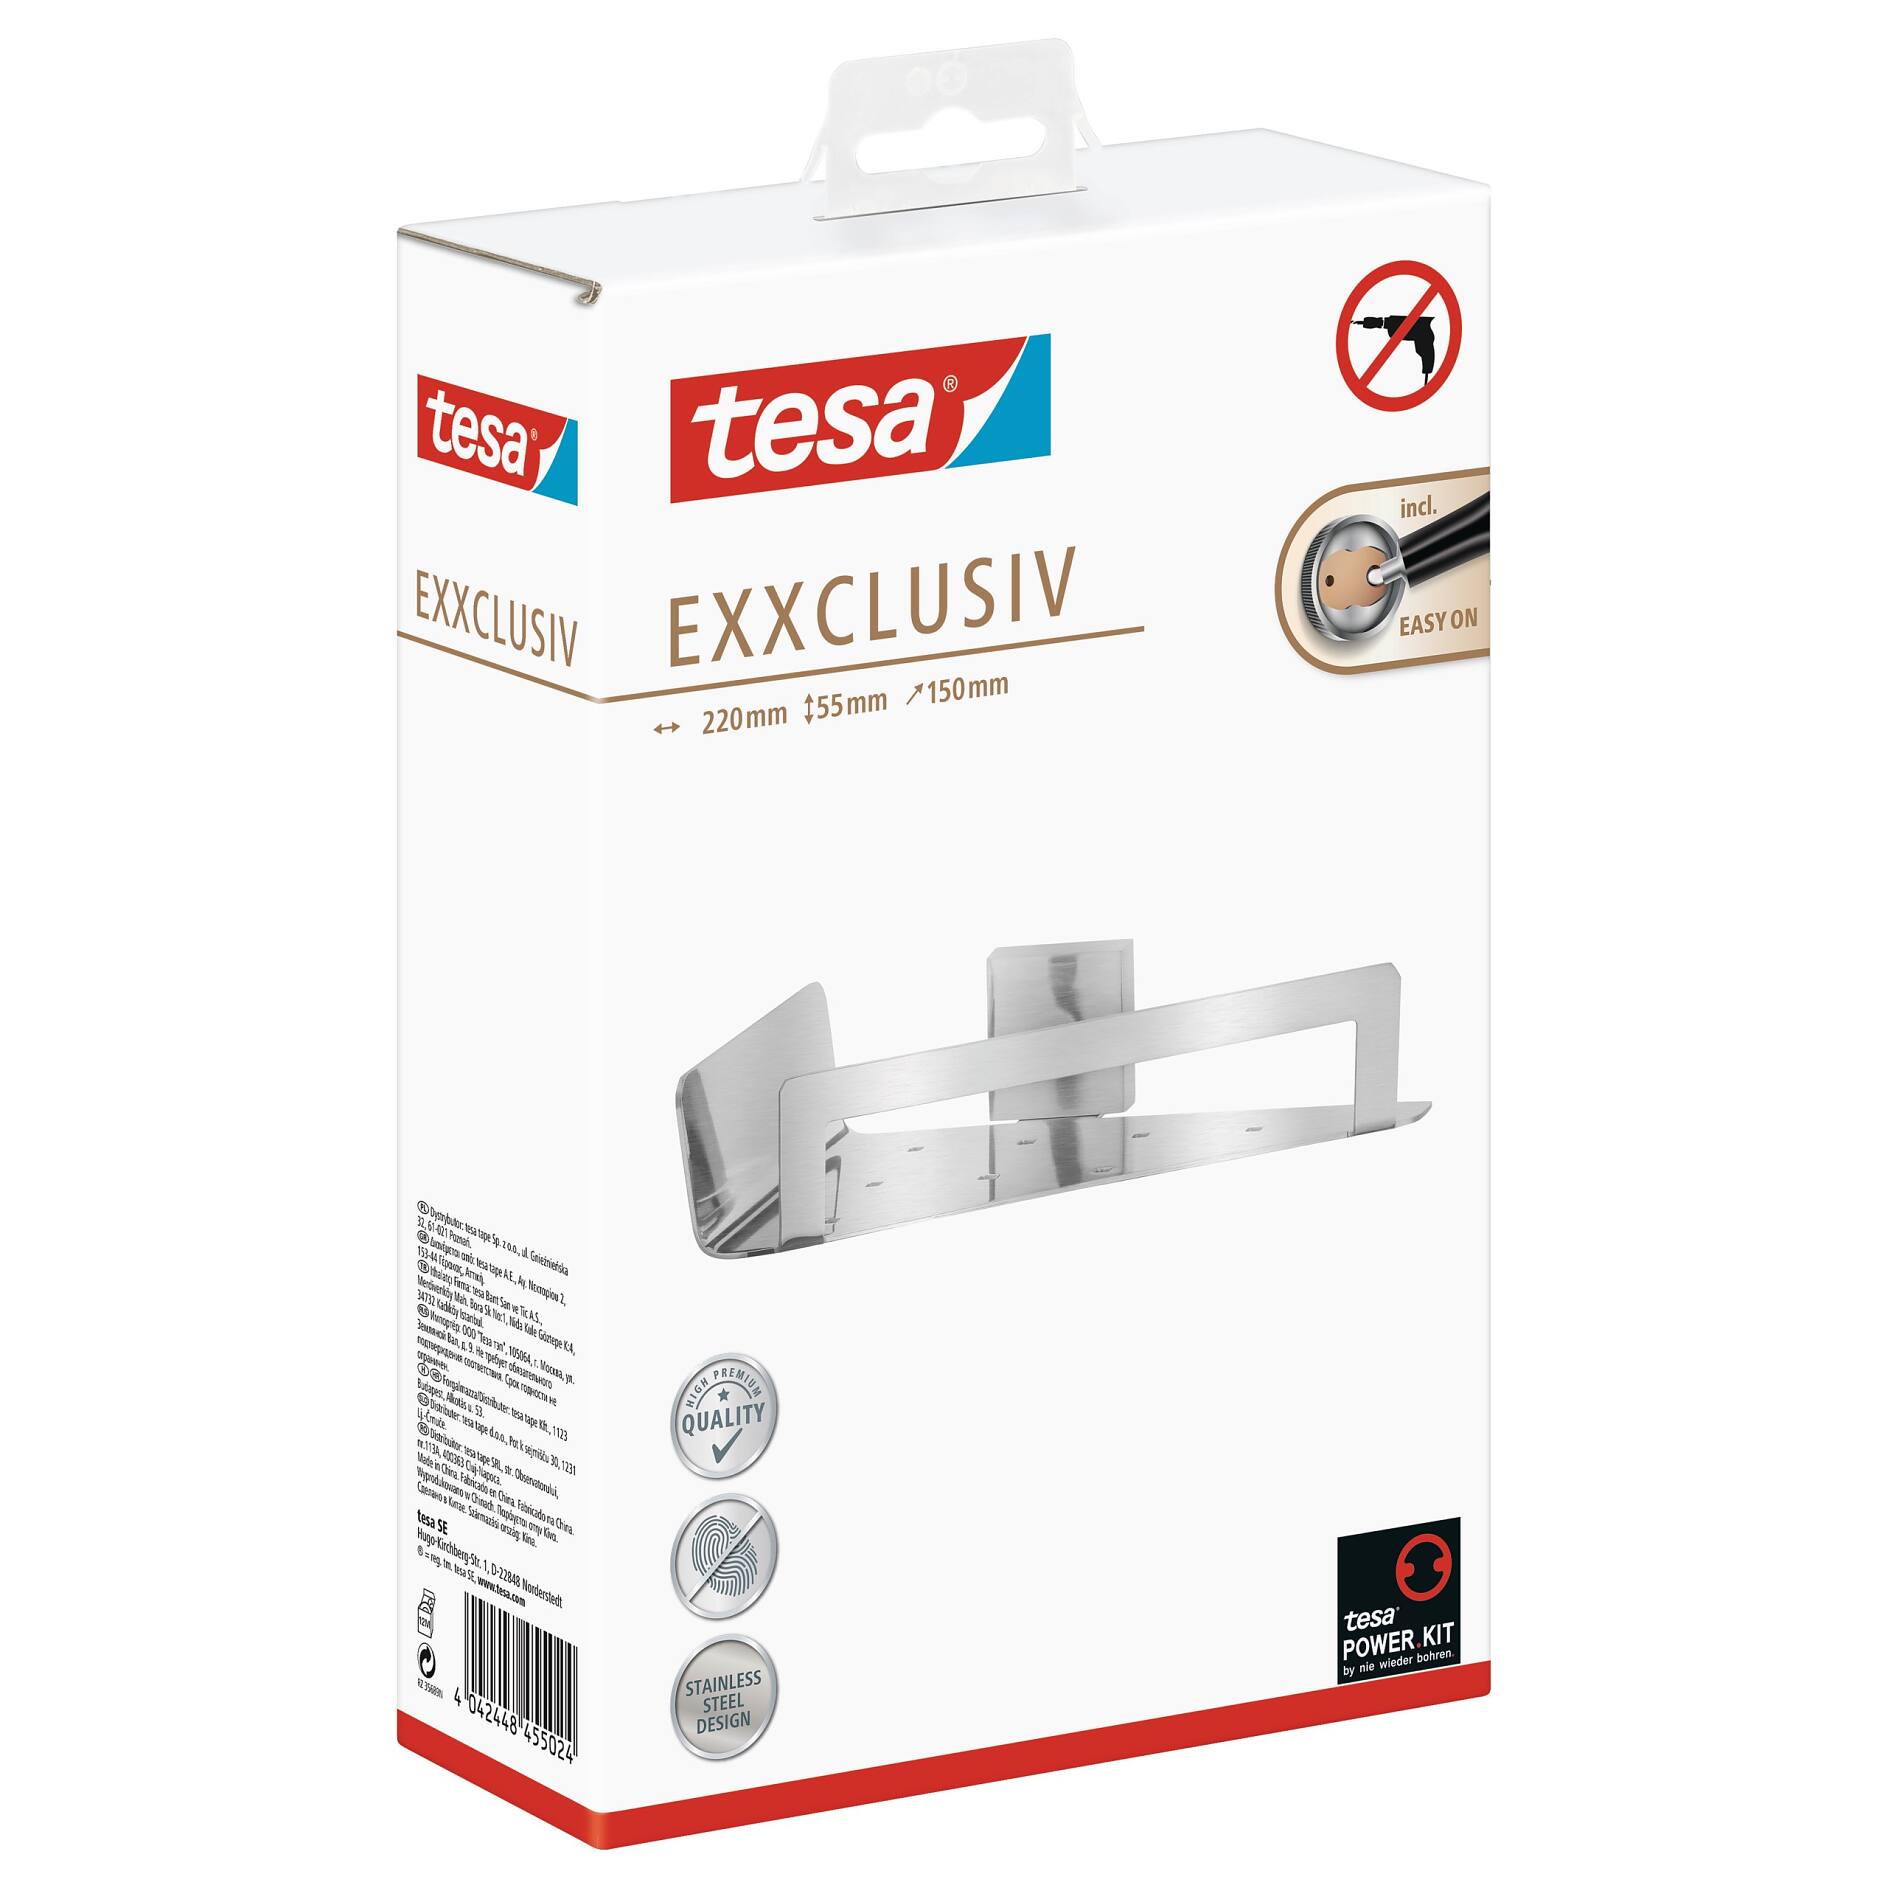 tesa® Baath Stick-On Shower Caddy, Self-Adhesive, Chromed Metal - tesa